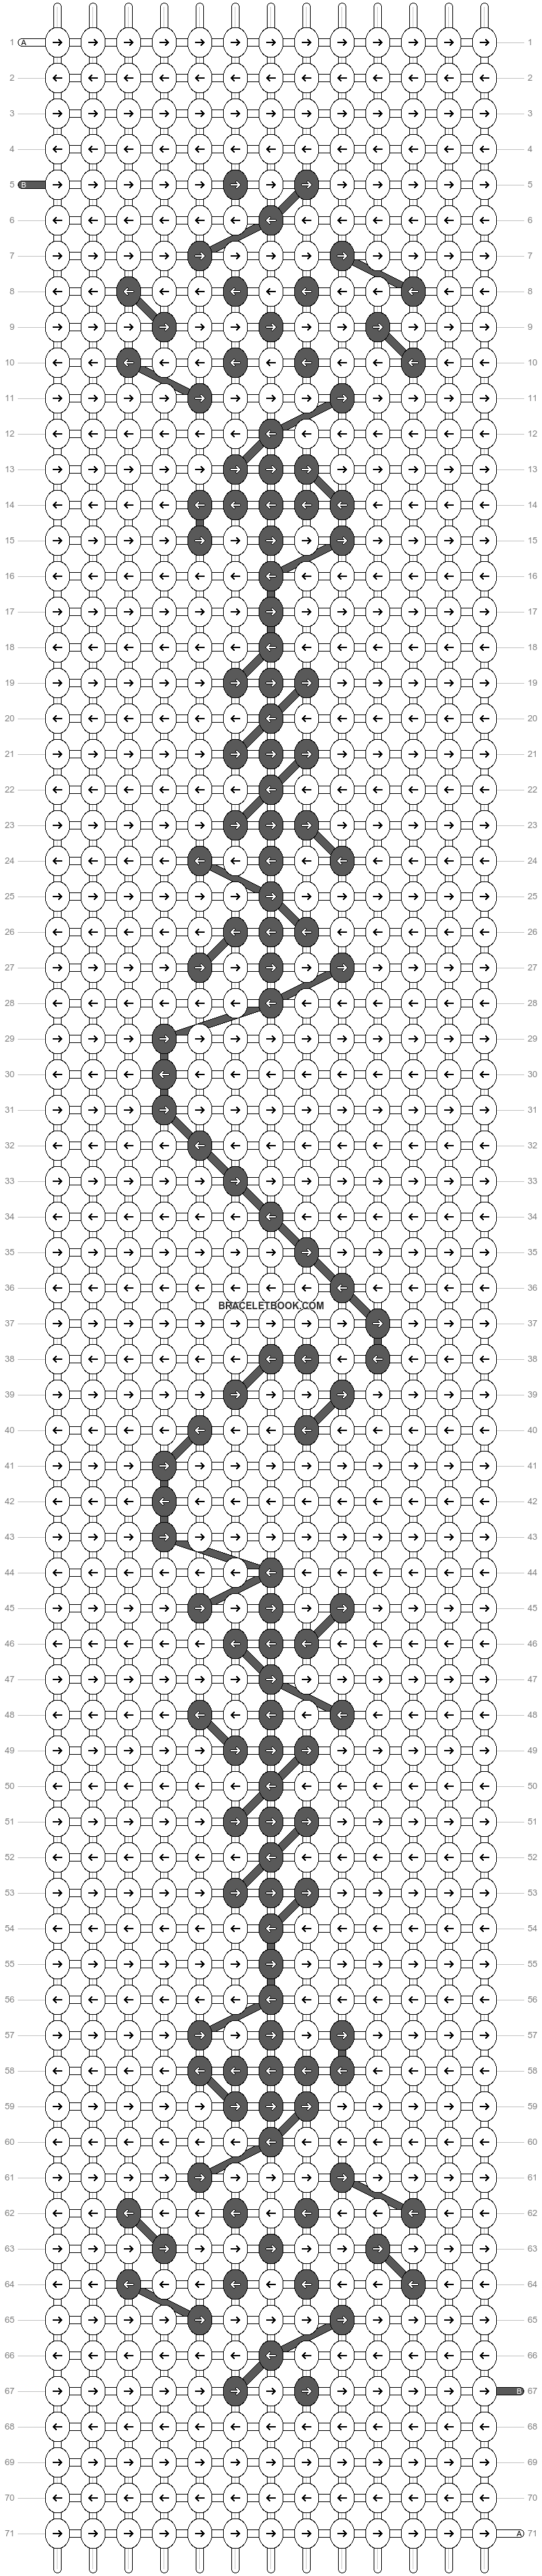 Alpha pattern #57396 variation #100252 pattern